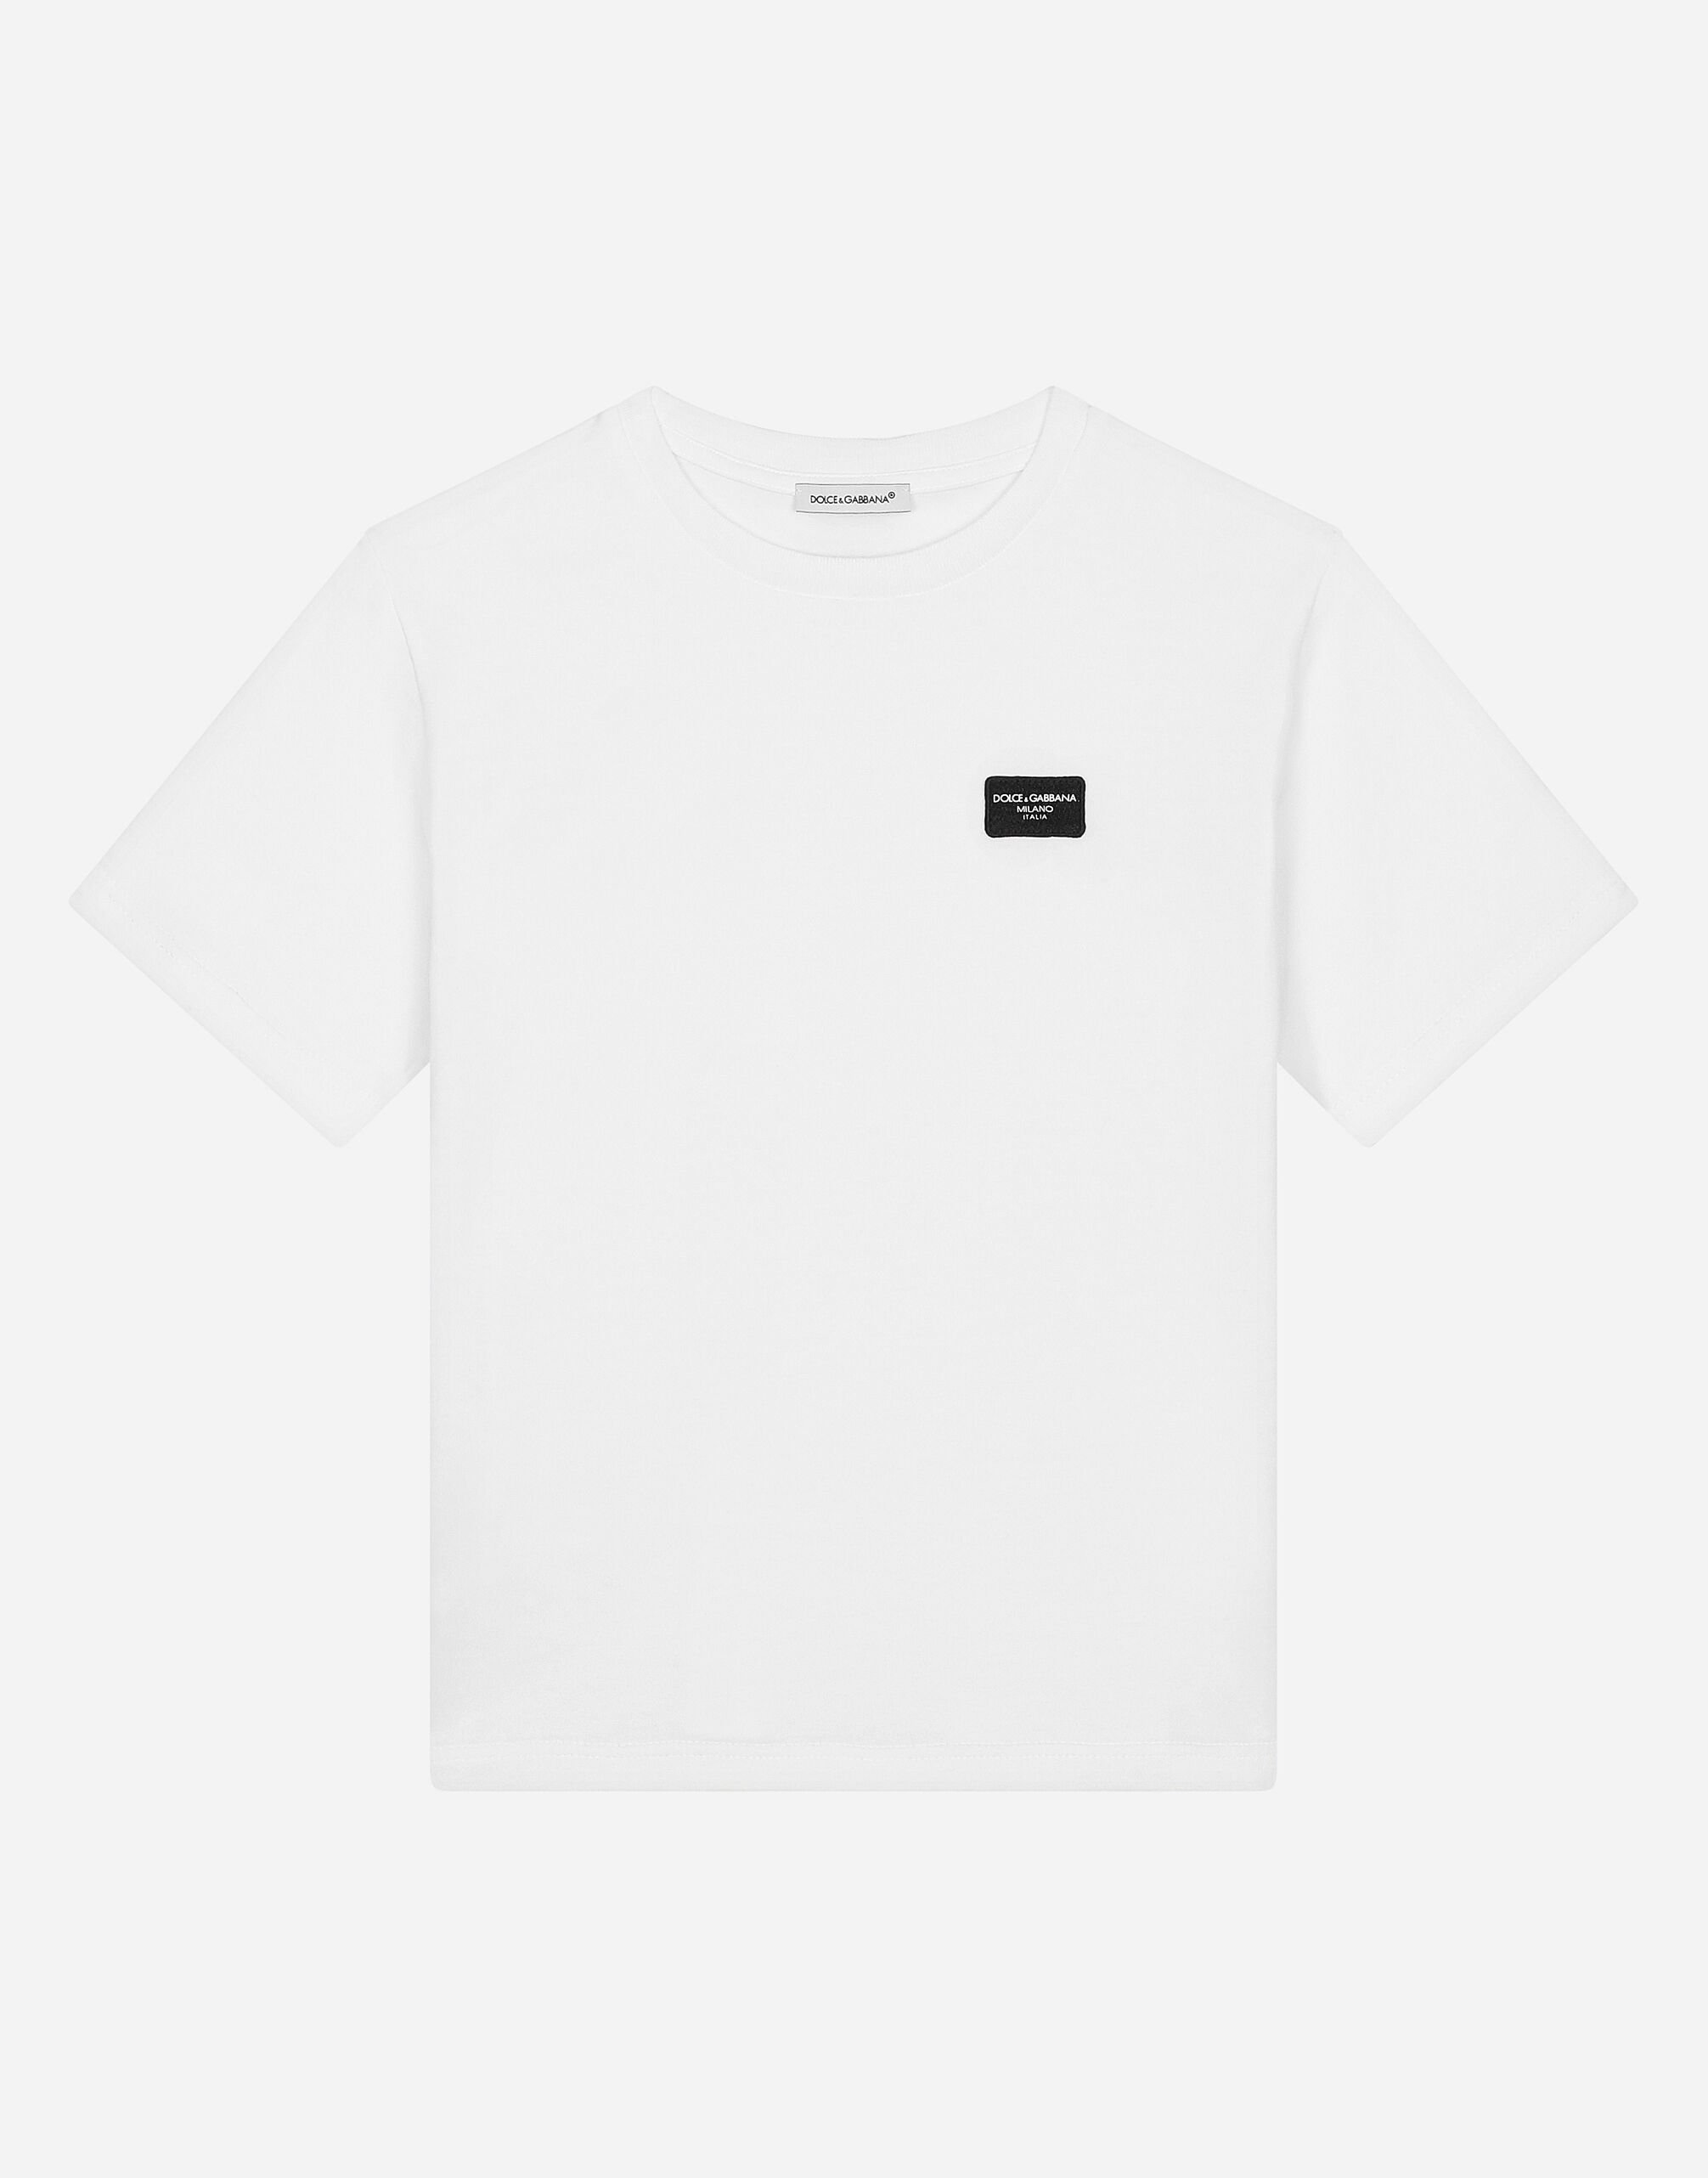 Dolce & Gabbana Jersey T-shirt with logo tag Beige L4JWKLG7NXC